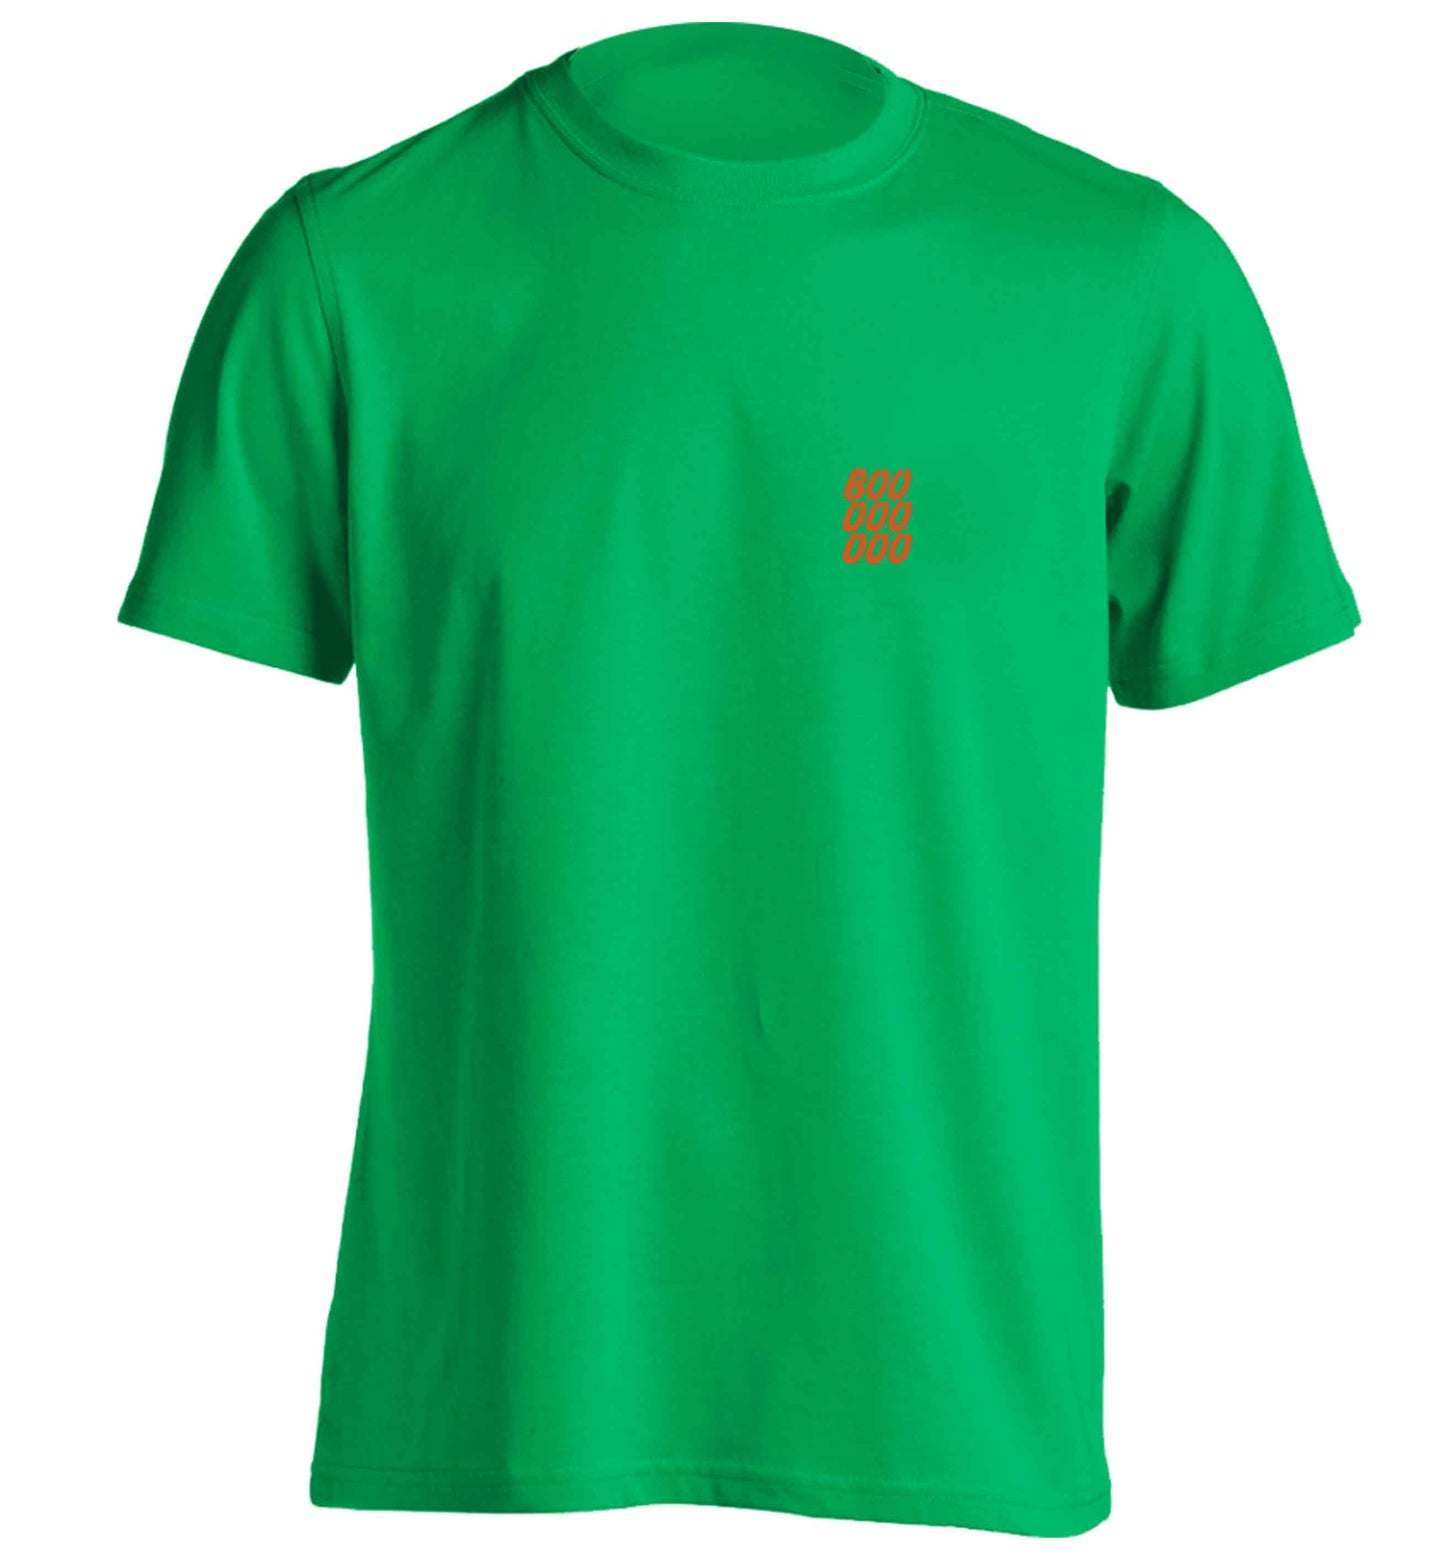 Boo pocket adults unisex green Tshirt 2XL